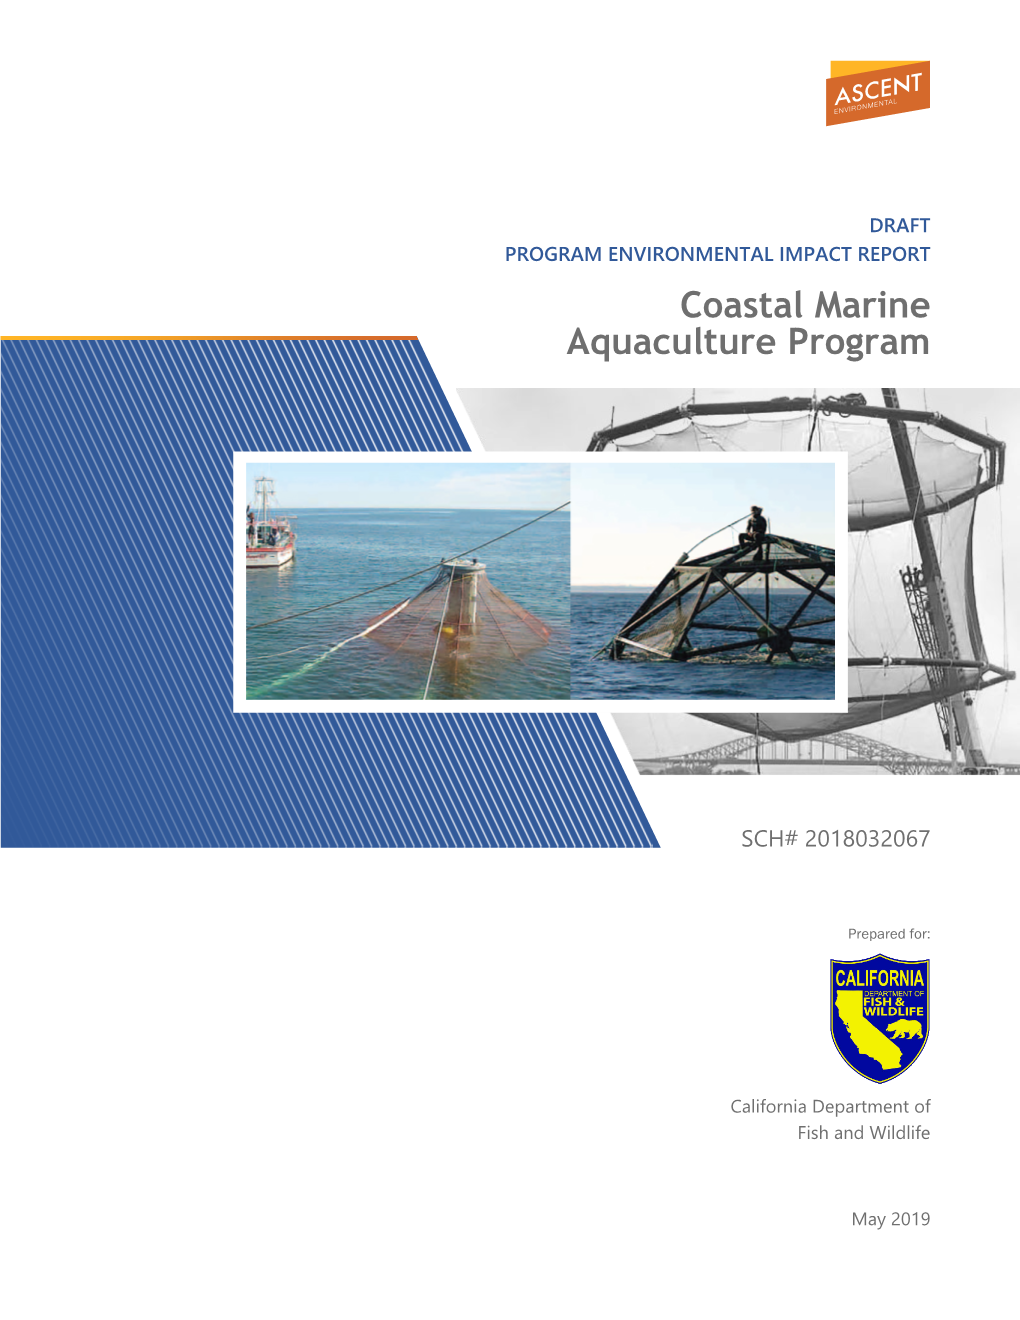 California Department of Fish and Wildlife Coastal Marine Aquaculture Program Draft PEIR I Table of Contents Ascent Environmental